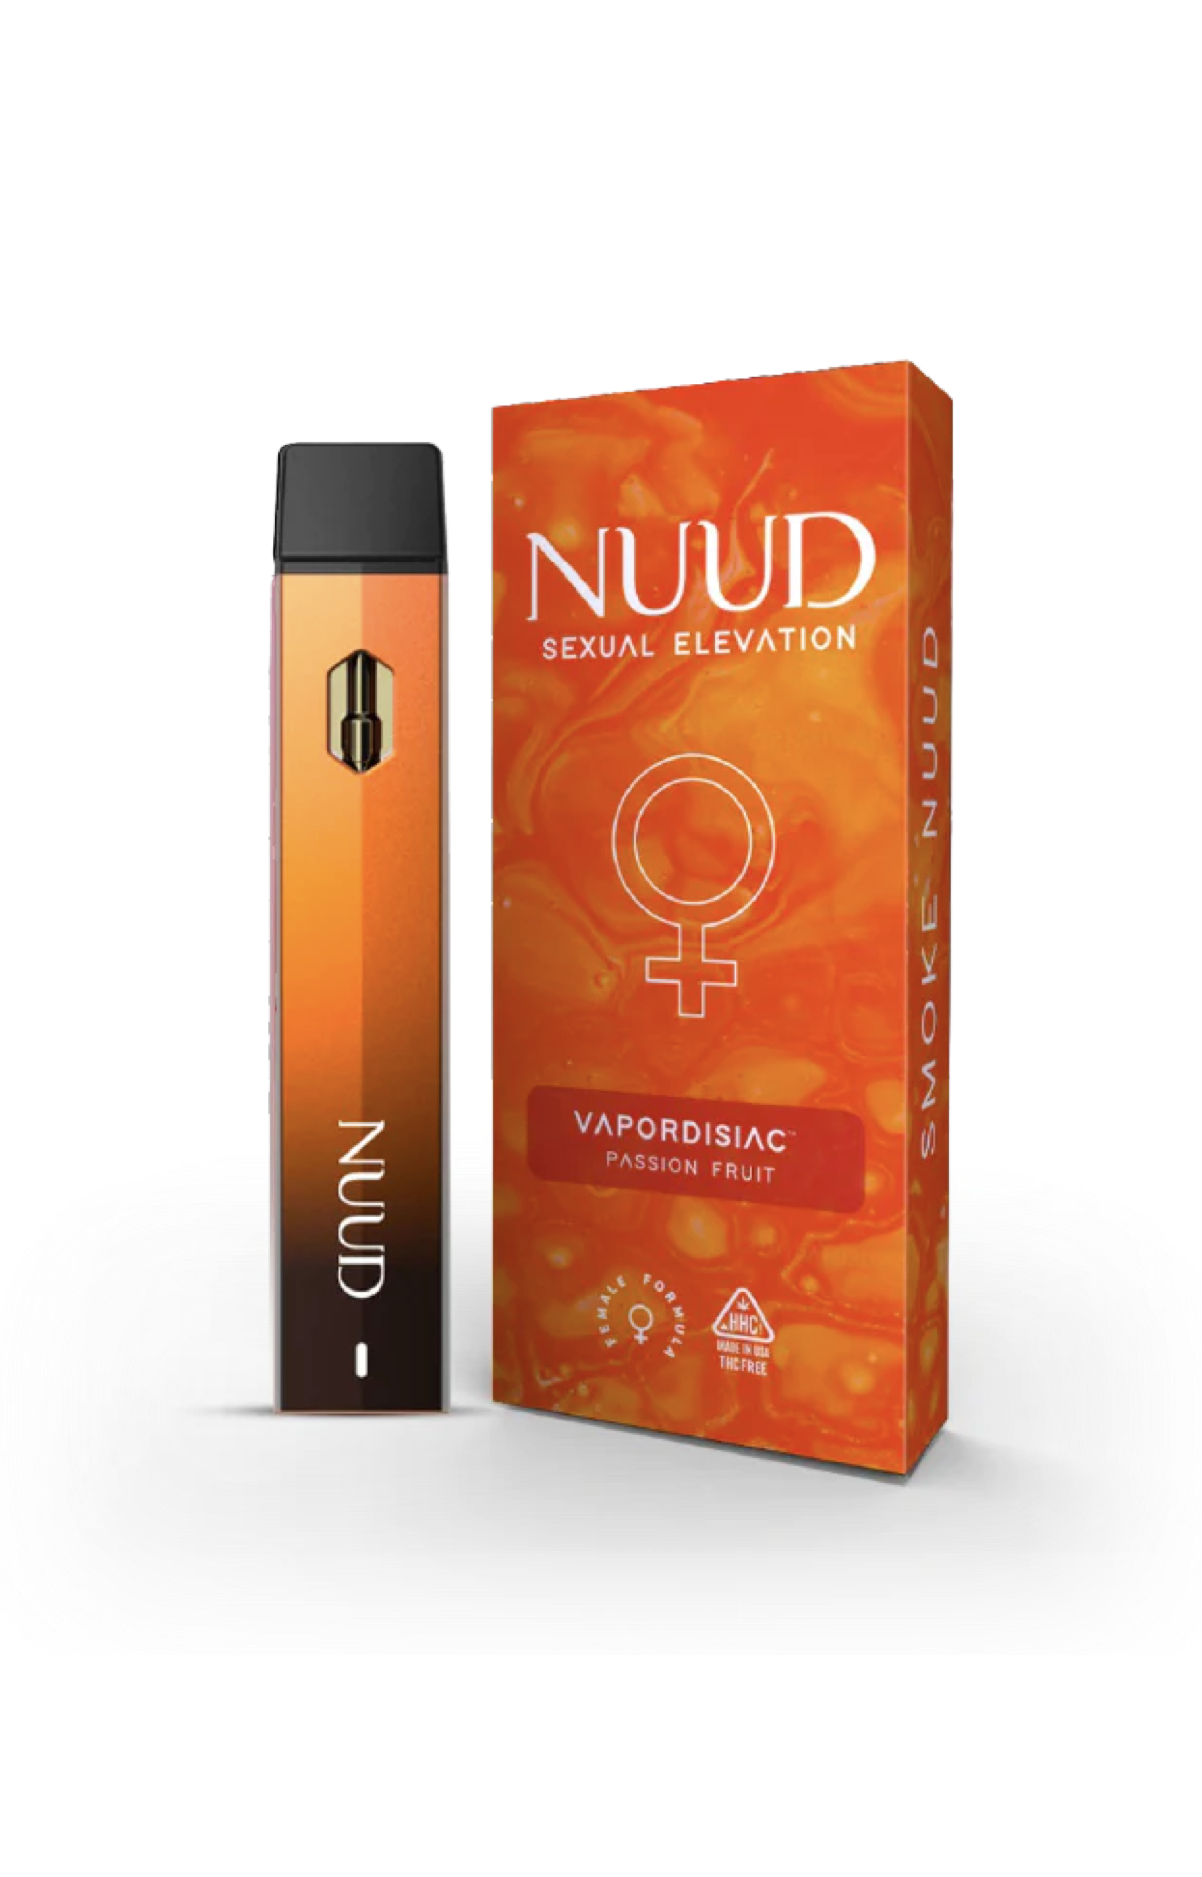 Nuud Female Passion Fruit Vapordisiac Bliss Wellness Market